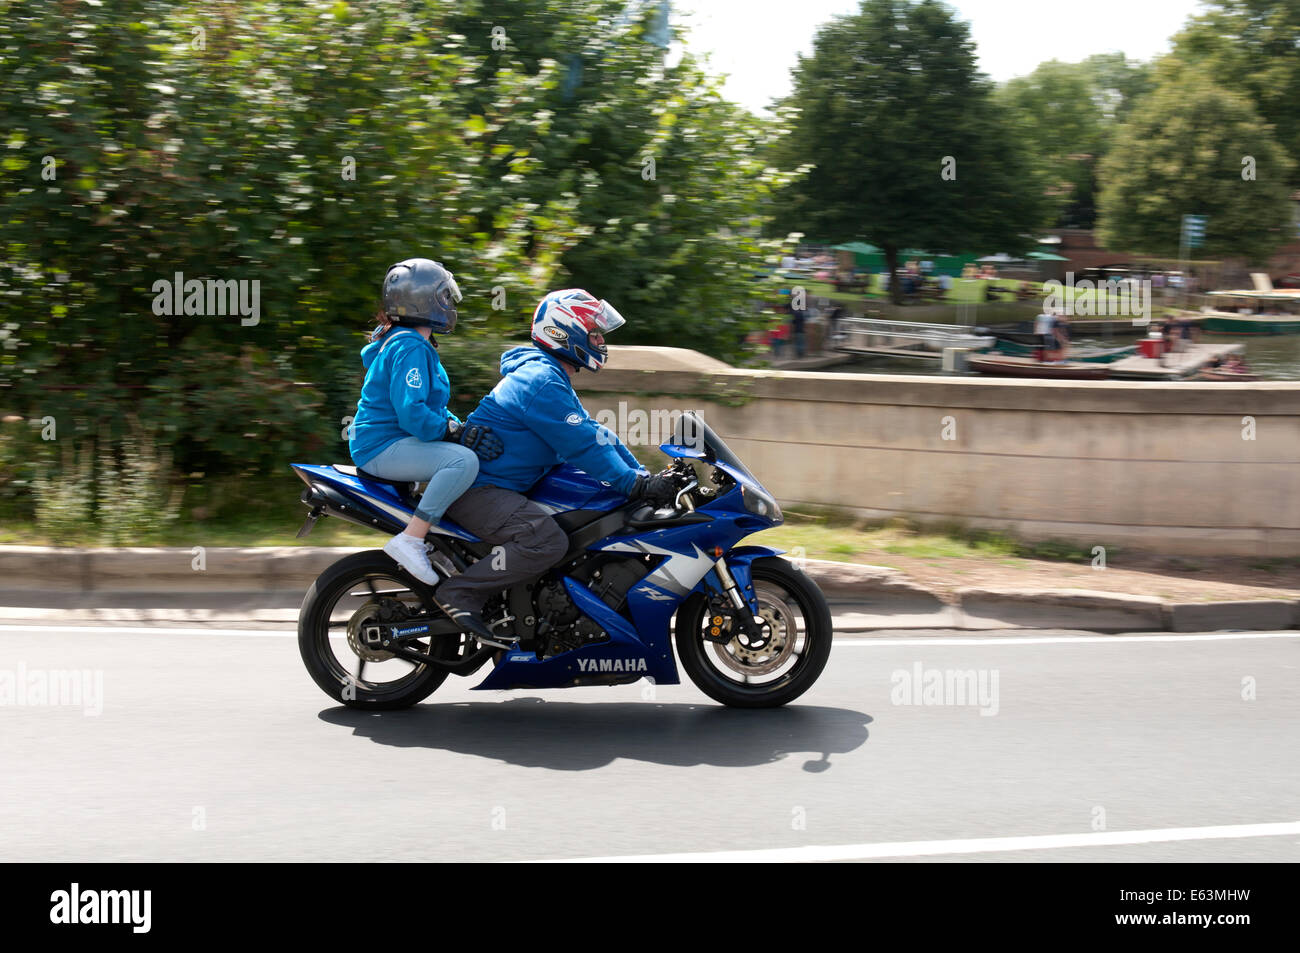 Moto Yamaha, Stratford-upon-Avon, Royaume-Uni Banque D'Images